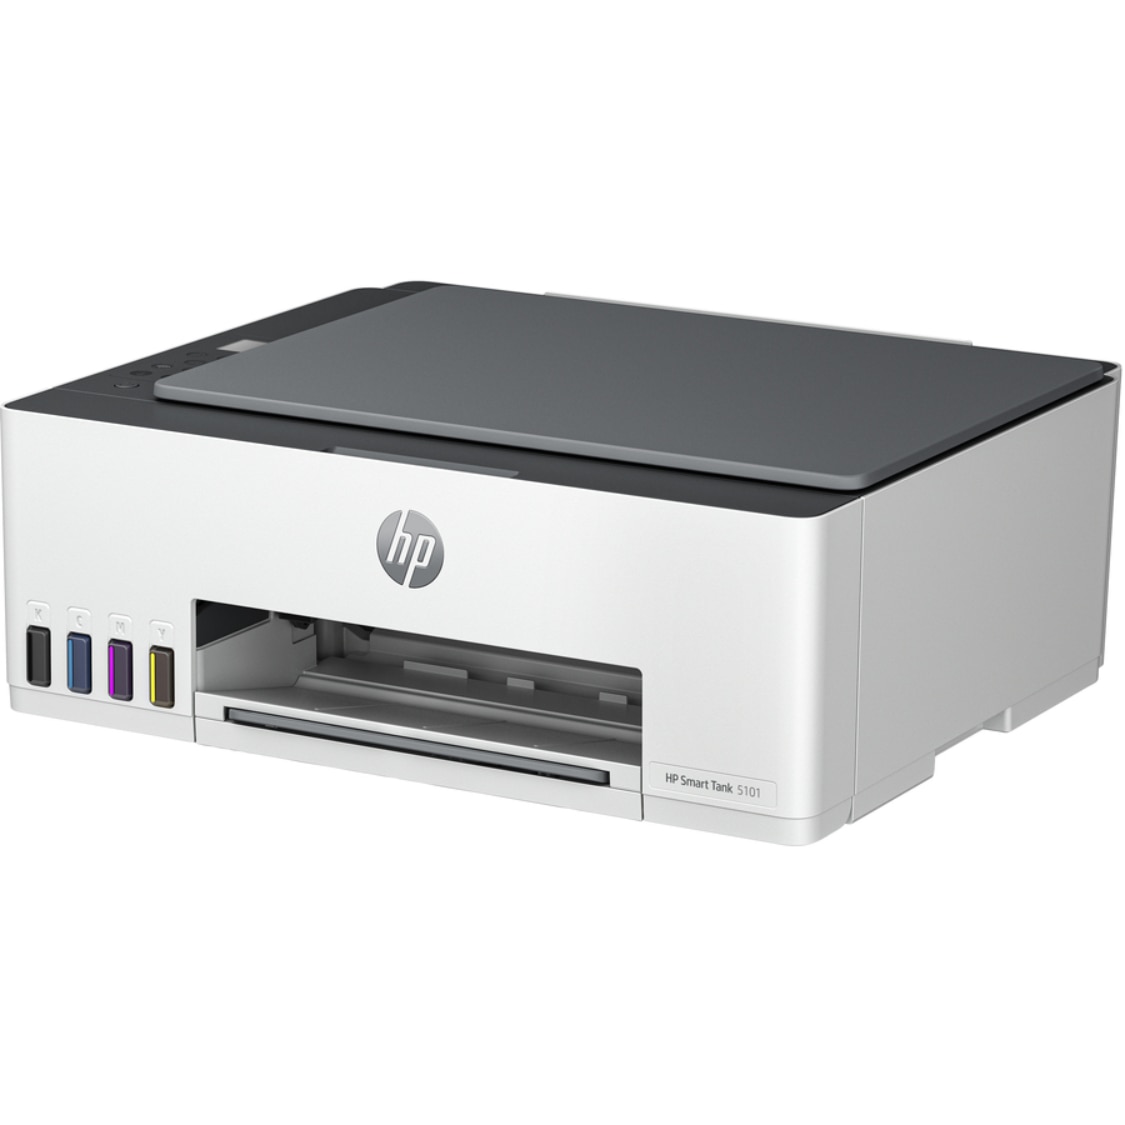 HP Smart Tank 5101 Wireless Inkjet Multifunction Printer